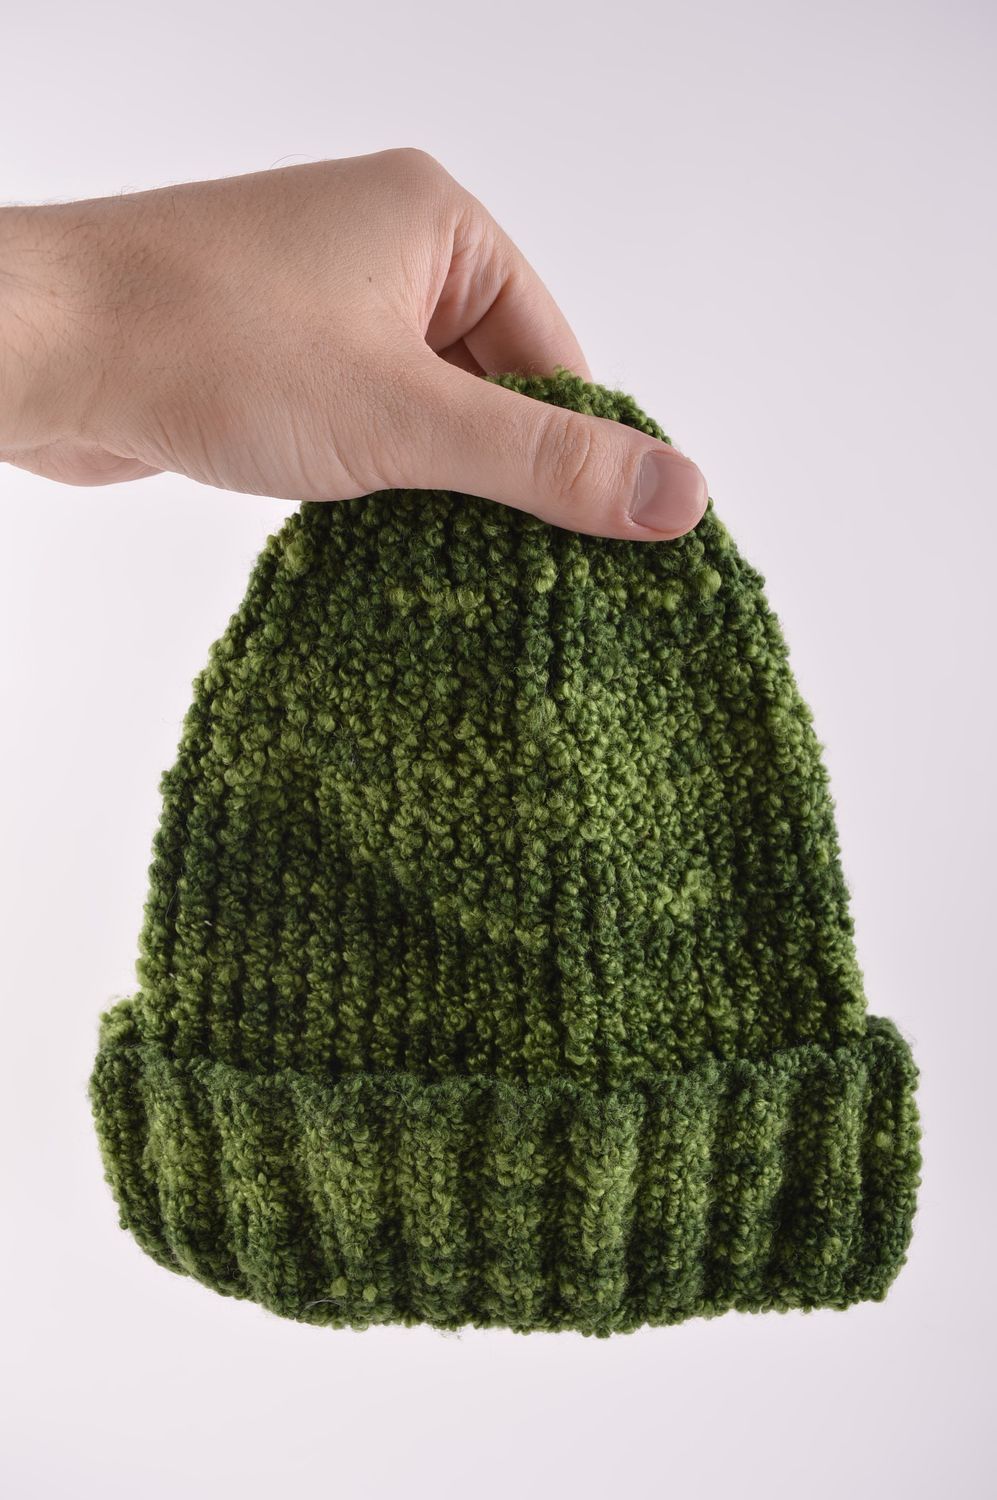 Handmade knitted hat winter hat for women winter hat winter accessories photo 5